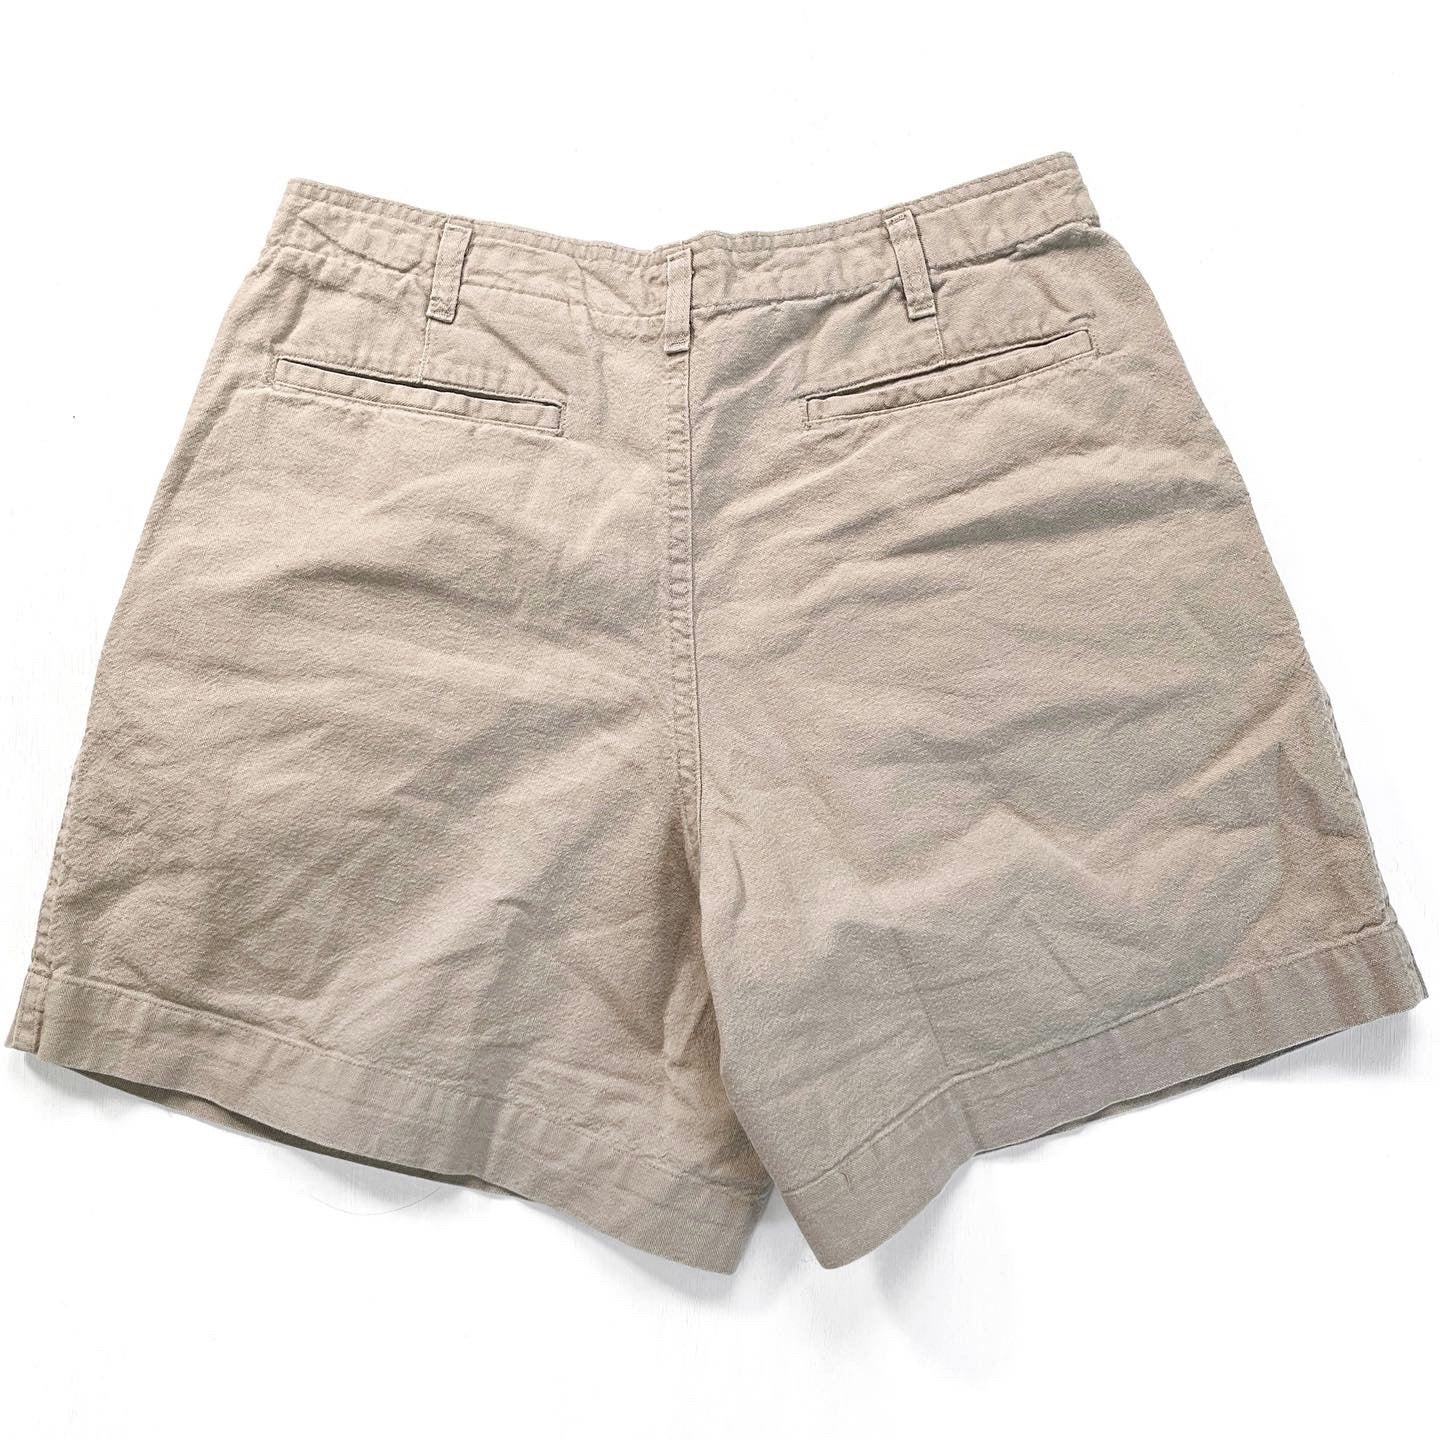 1991 Patagonia Mens 7” Pleated Cotton Field Shorts, Khaki (32/33)